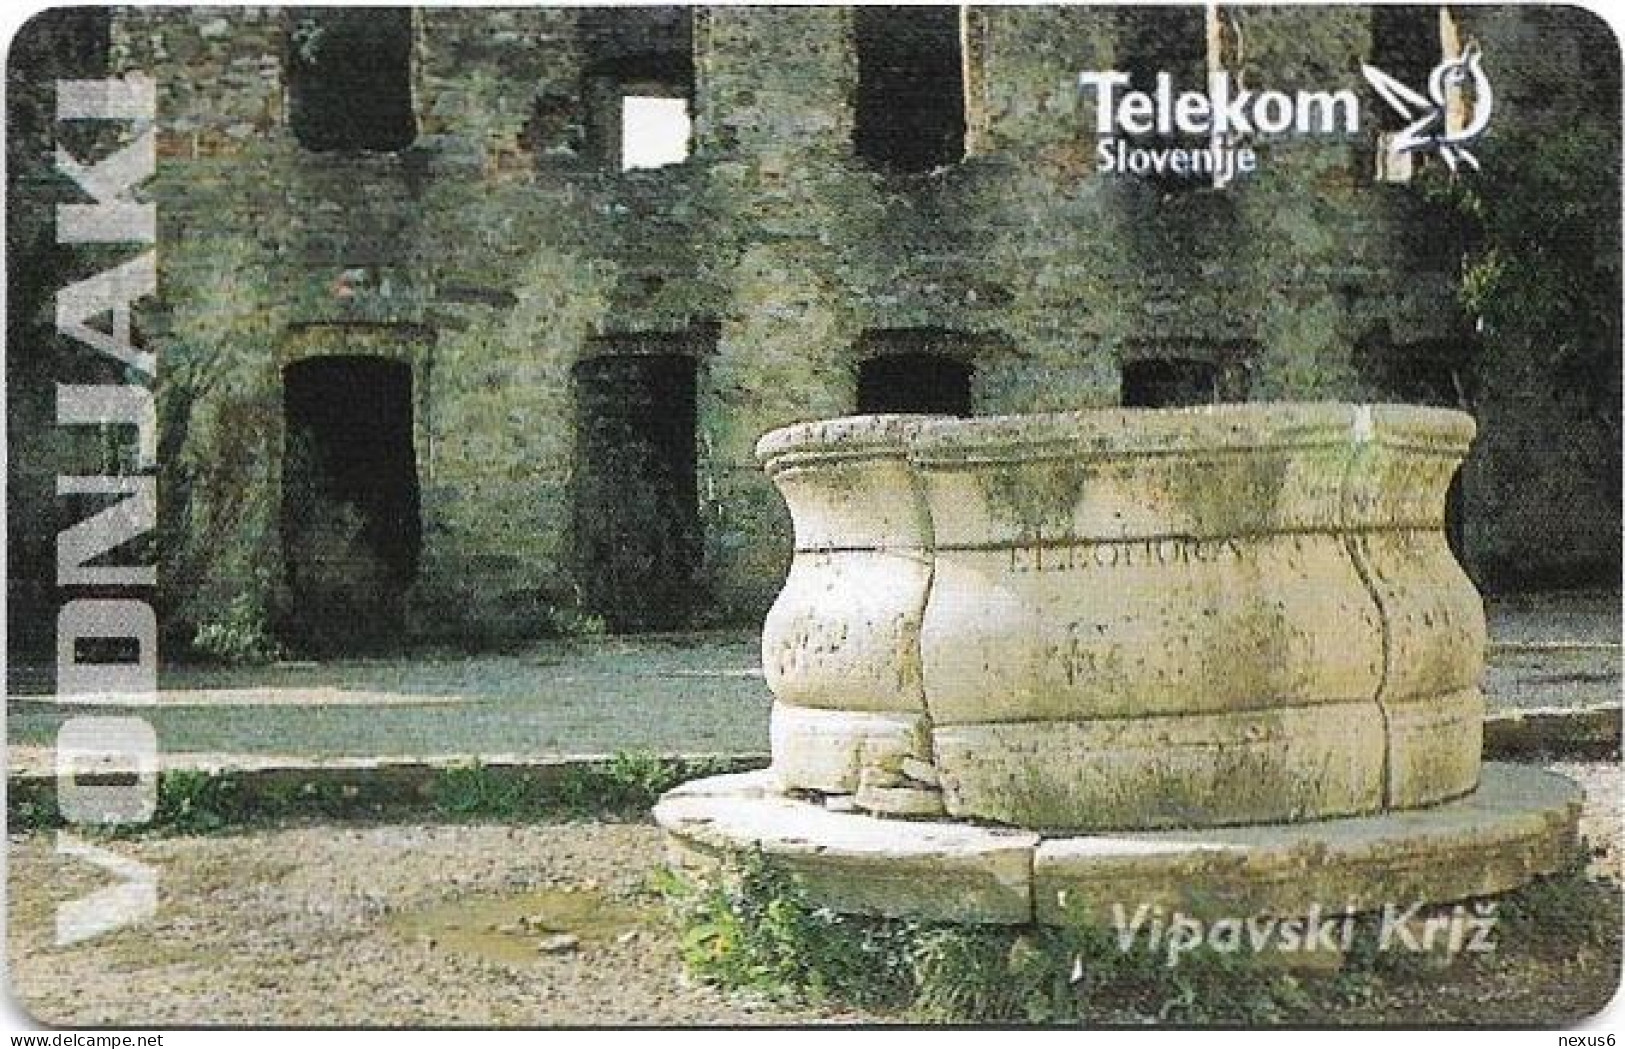 Slovenia - Telekom Slovenije - Water Well - Grad 17. Stoletje, Gem5 Red, 01.2001, 50Units, 9.960ex, Used - Slowenien